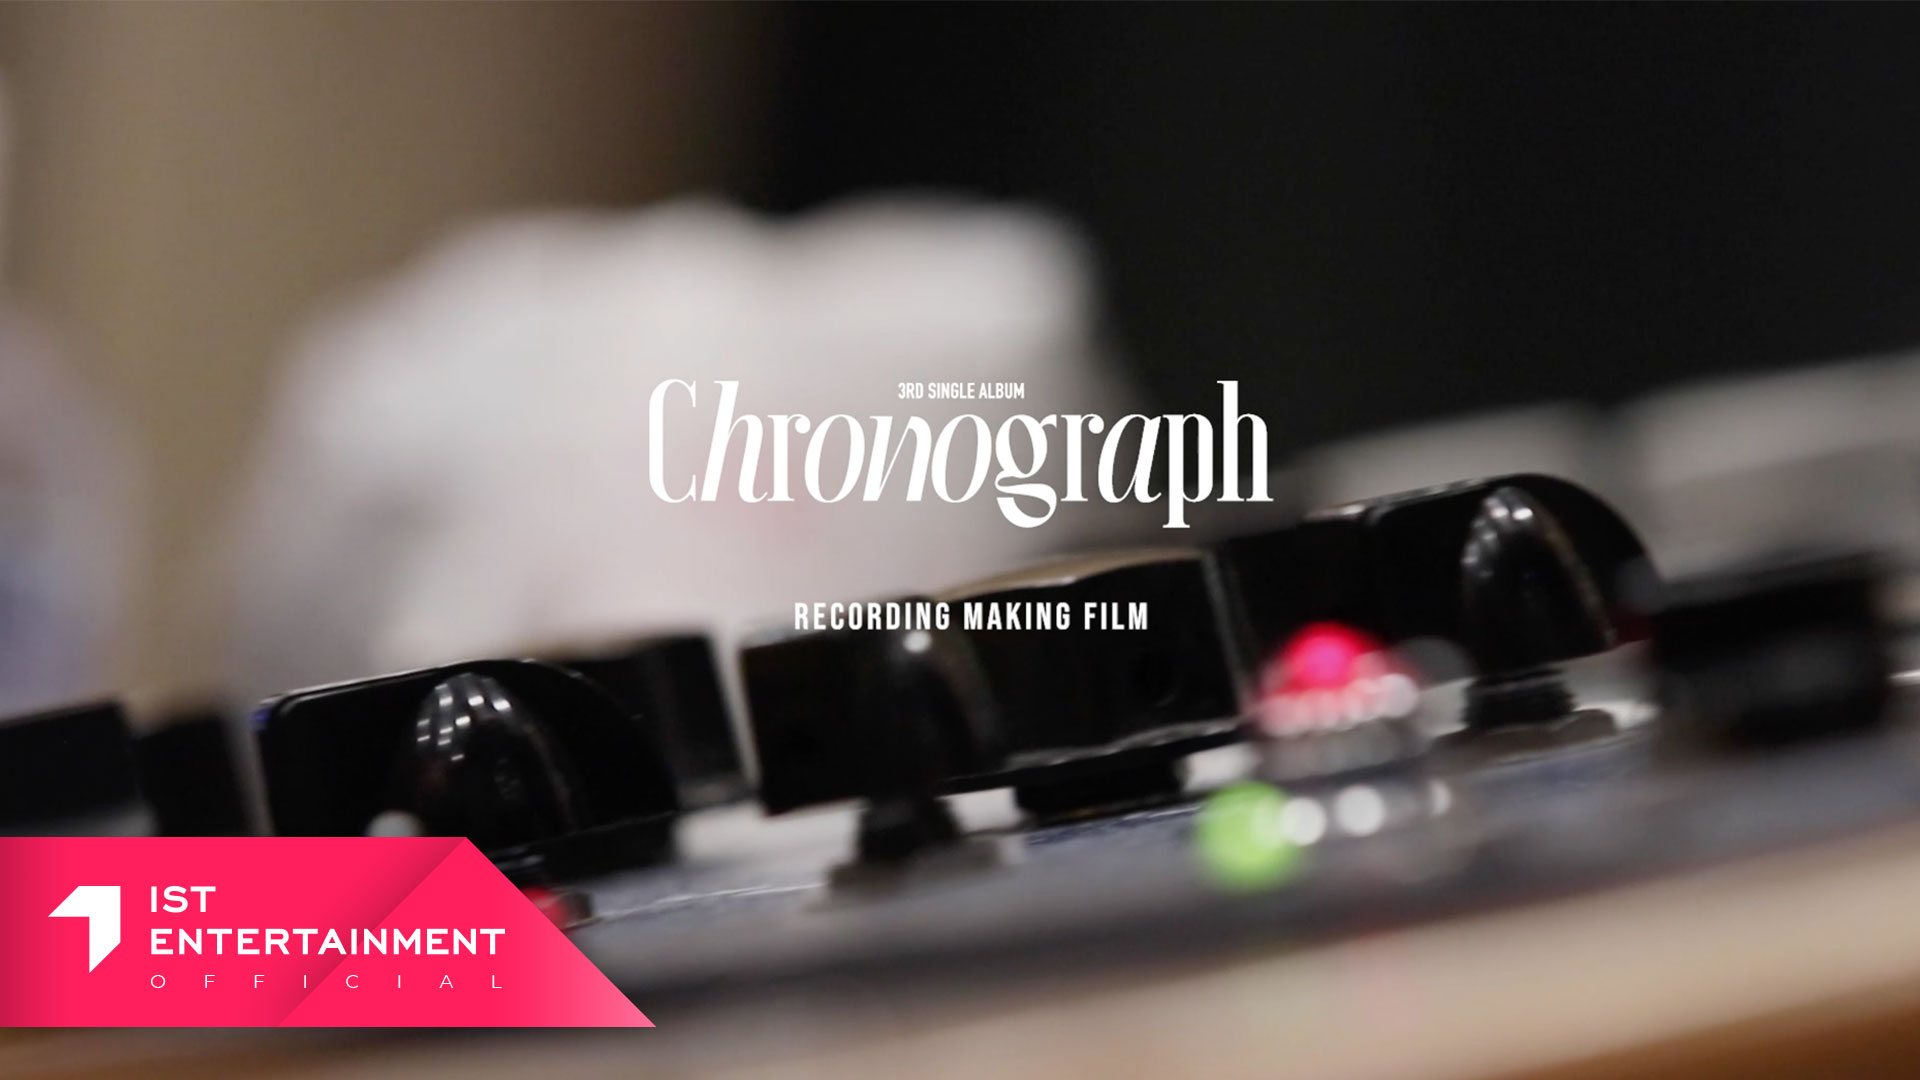 VICTON 빅톤 'Chronograph' Recording Making Film